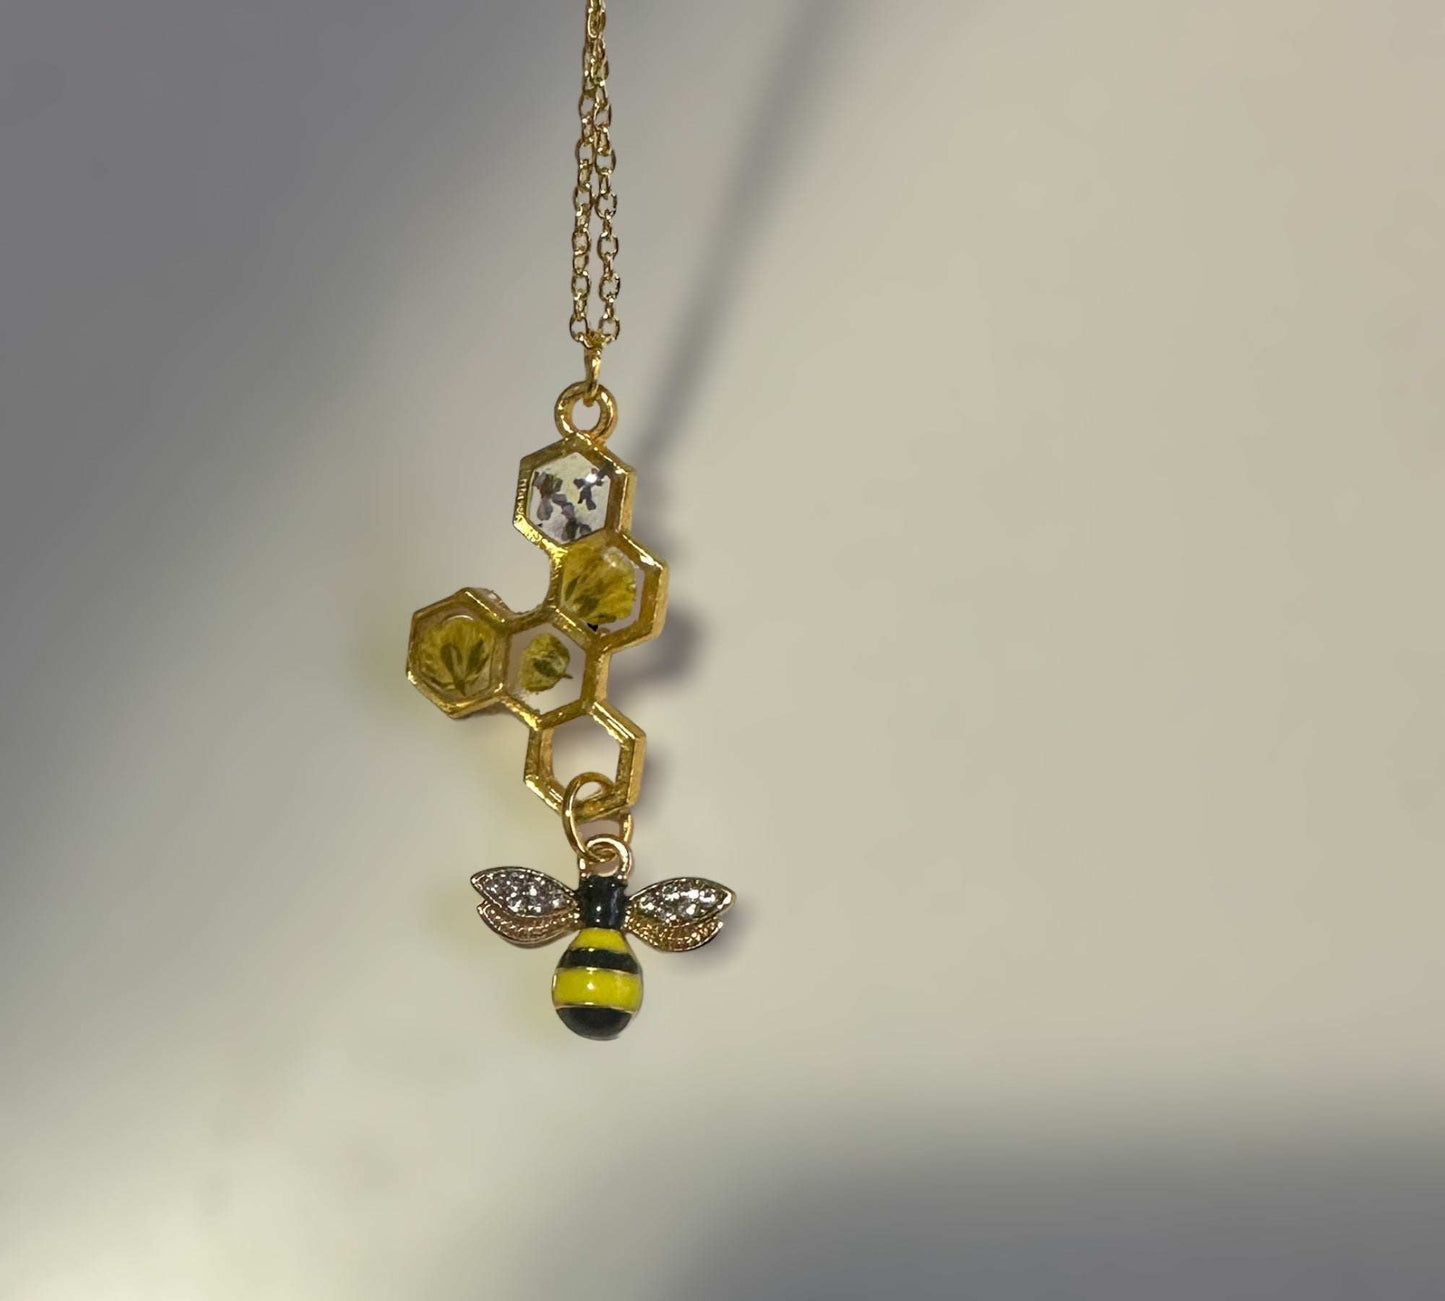 Bee Harmony Pendant - Handmade Pendant with Rhinestone Bee Charm